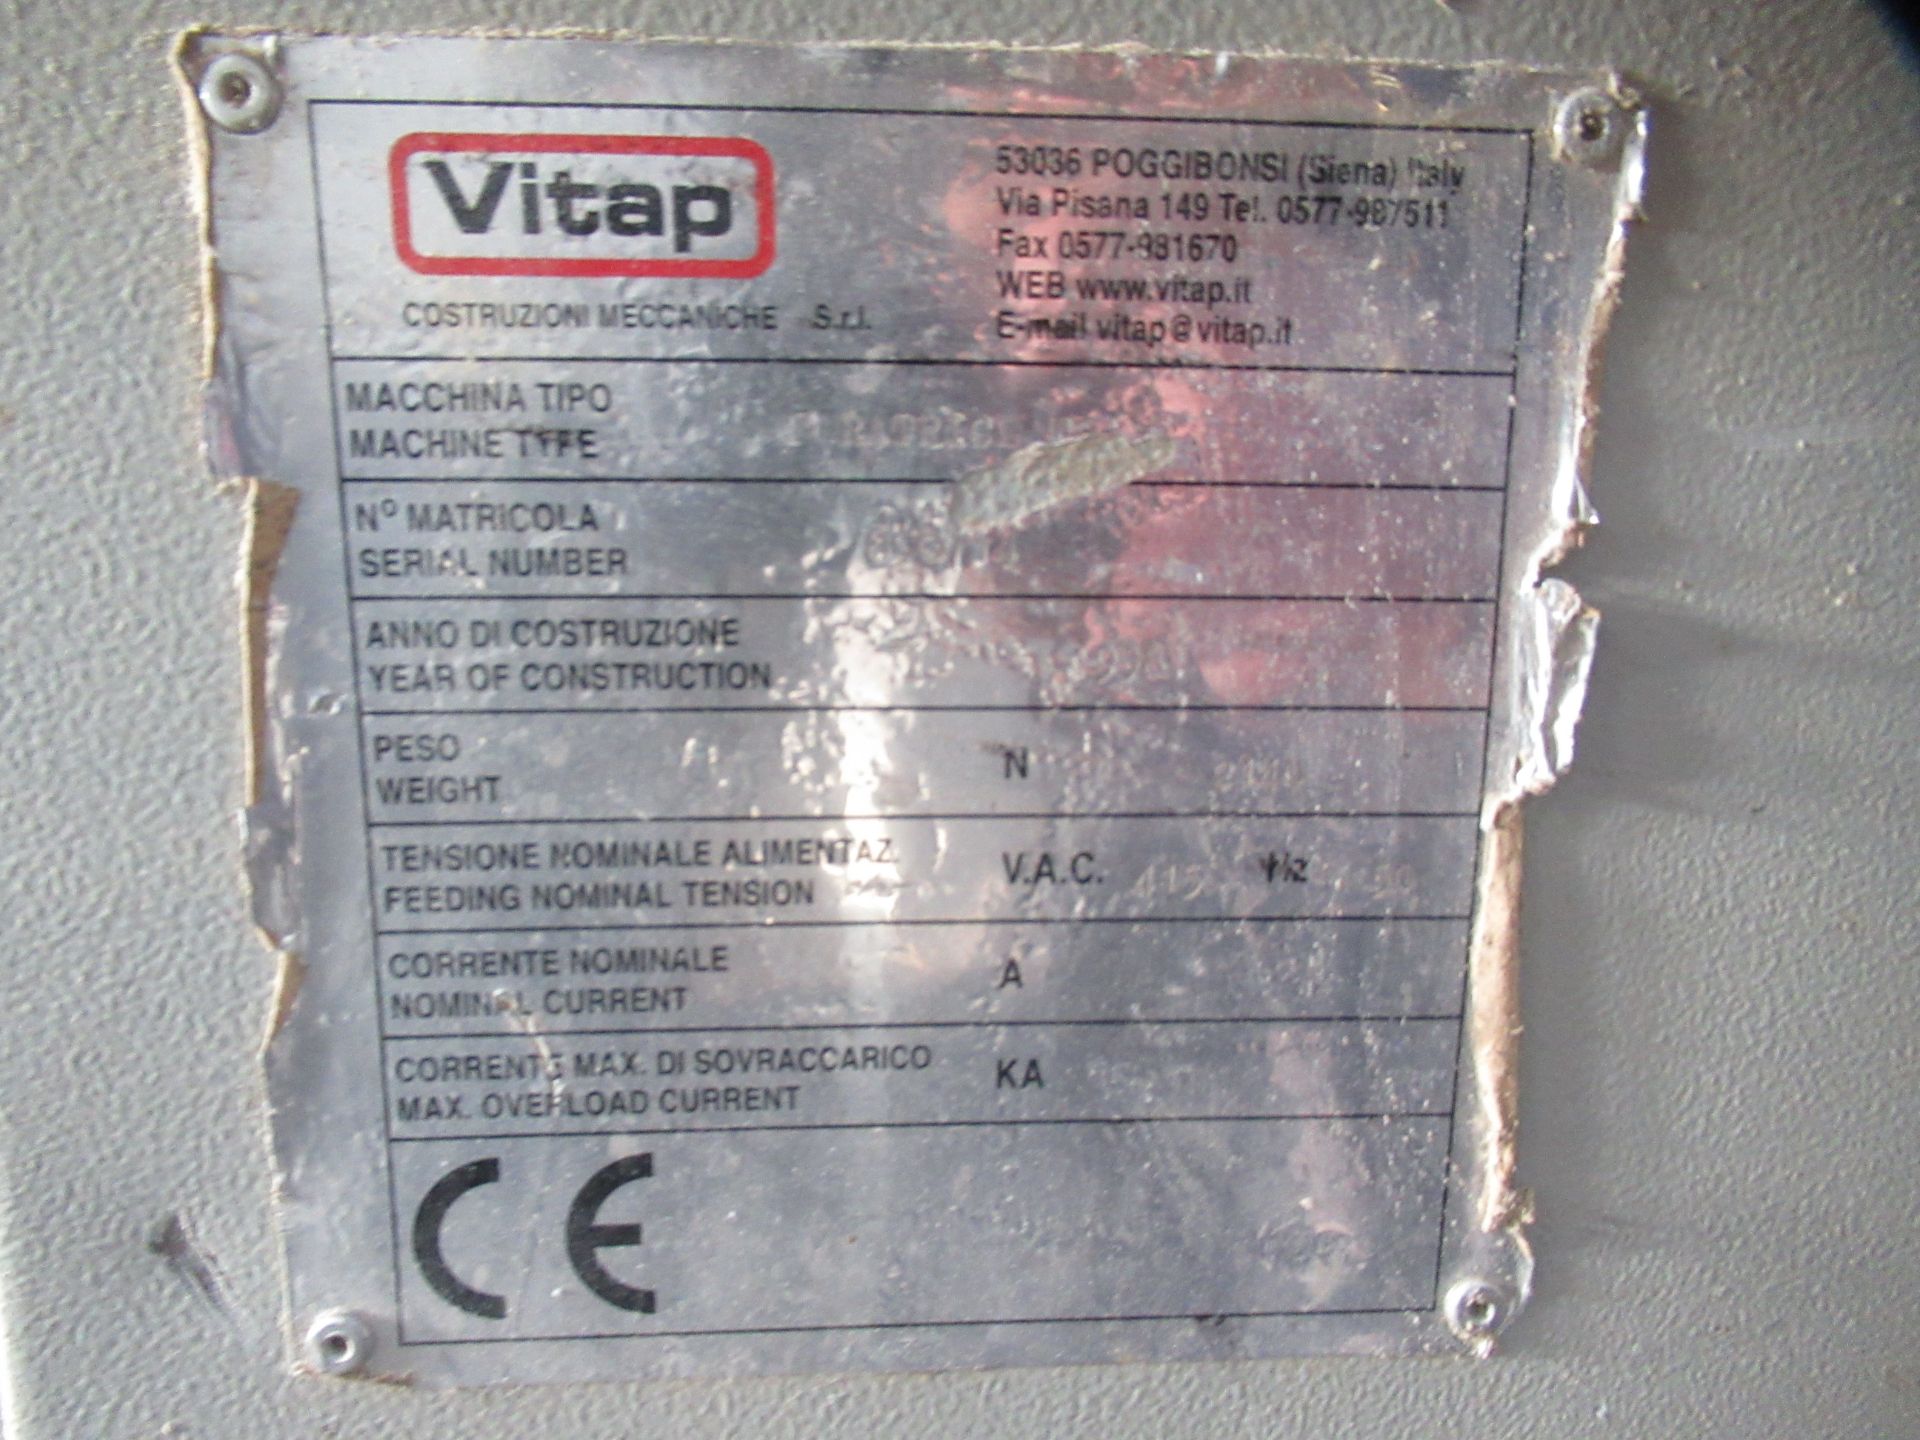 Vitap Foratrice Multi Head Boring Machine - 3ph - Image 5 of 5